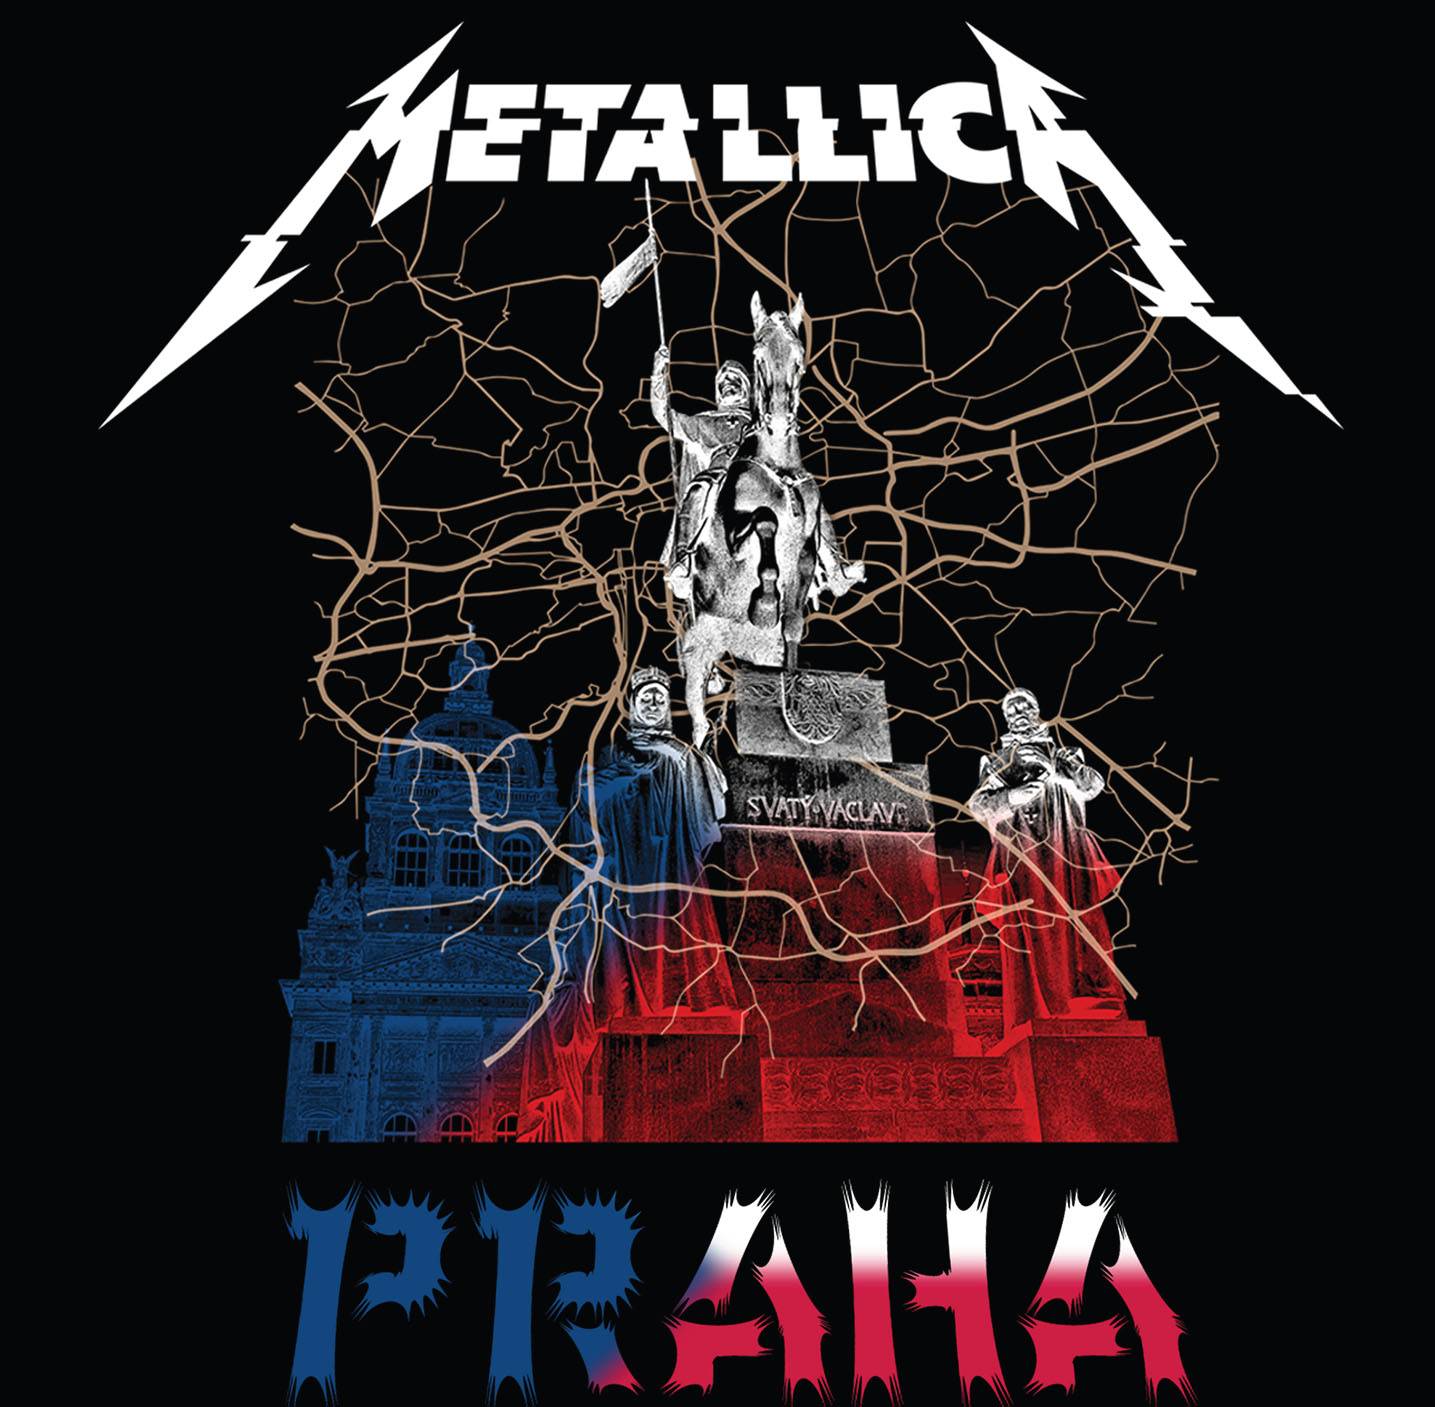 RECENZE: Metallica v Letňanech na CD a v MP3 - záznam srpnového koncertu z  Prahy zvýrazňuje silné stránky kapely | iREPORT – music&style magazine